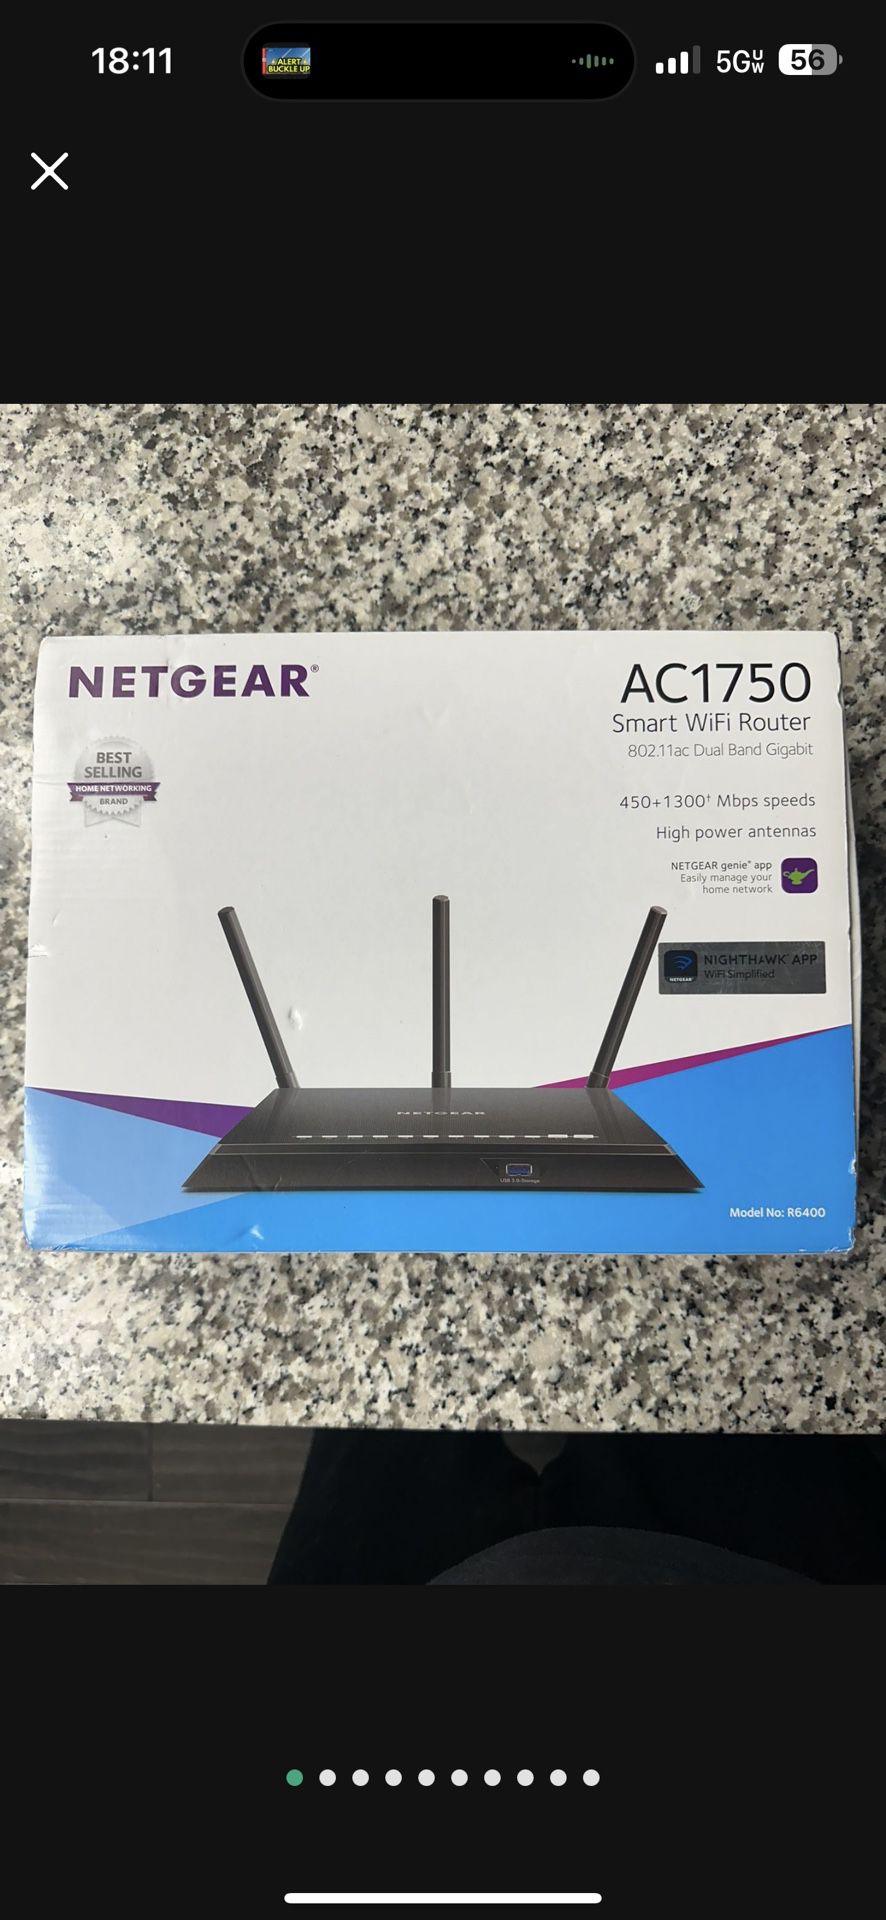 NetGear AC 1750 WiFi Router